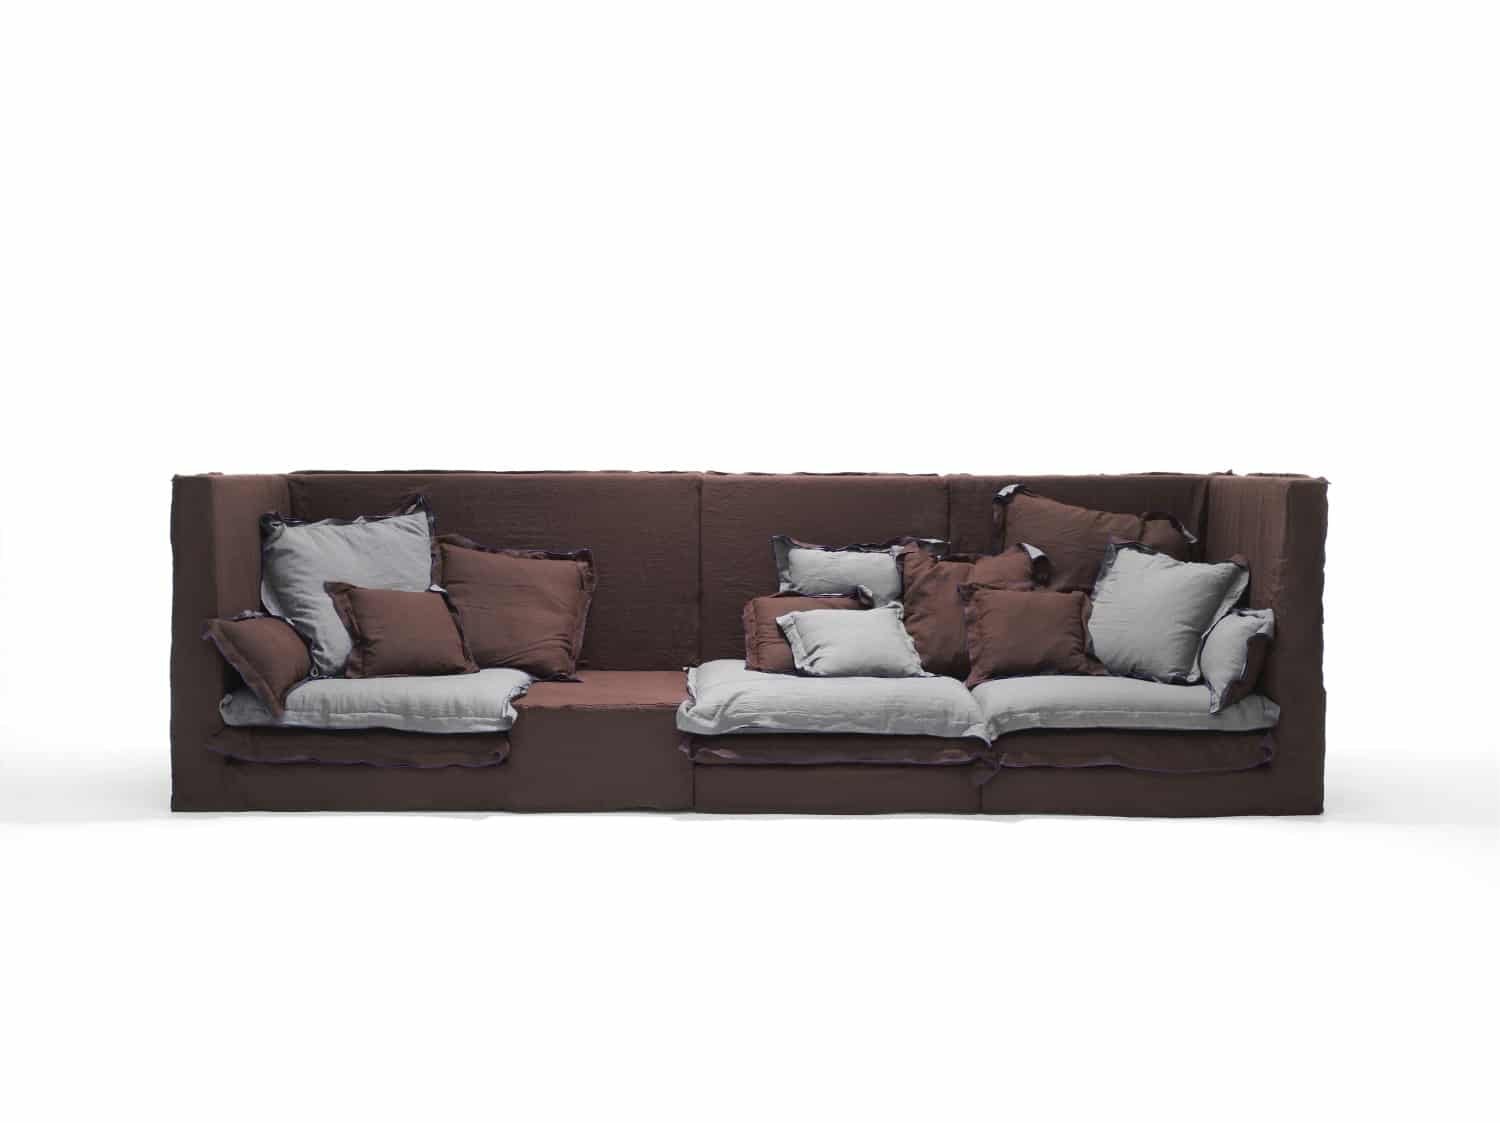 Linteloo-Jans-new-sofa-30.jpg